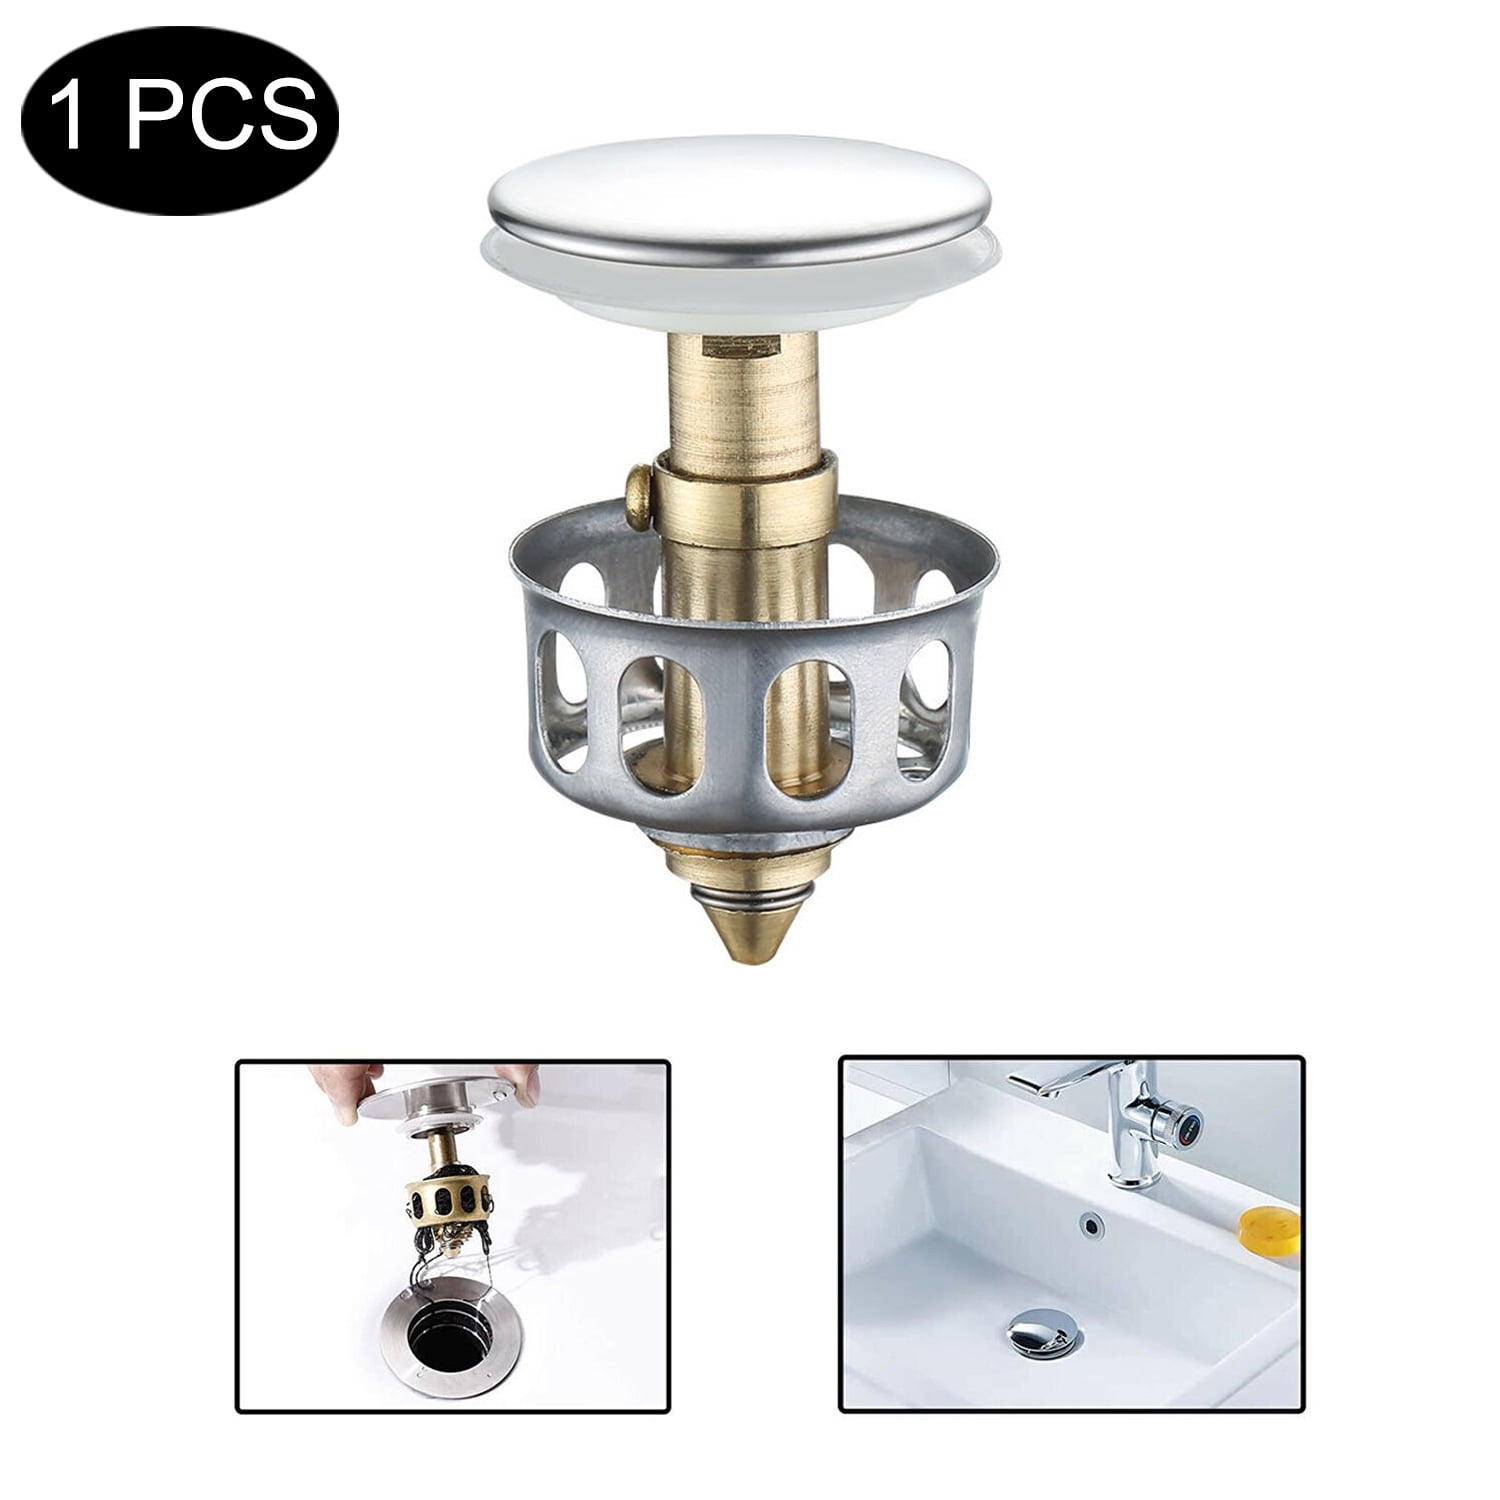 Universal Wash Basin Bounce Drain Filter Pop-Up Bathroom Sink Drain Plug A4860 